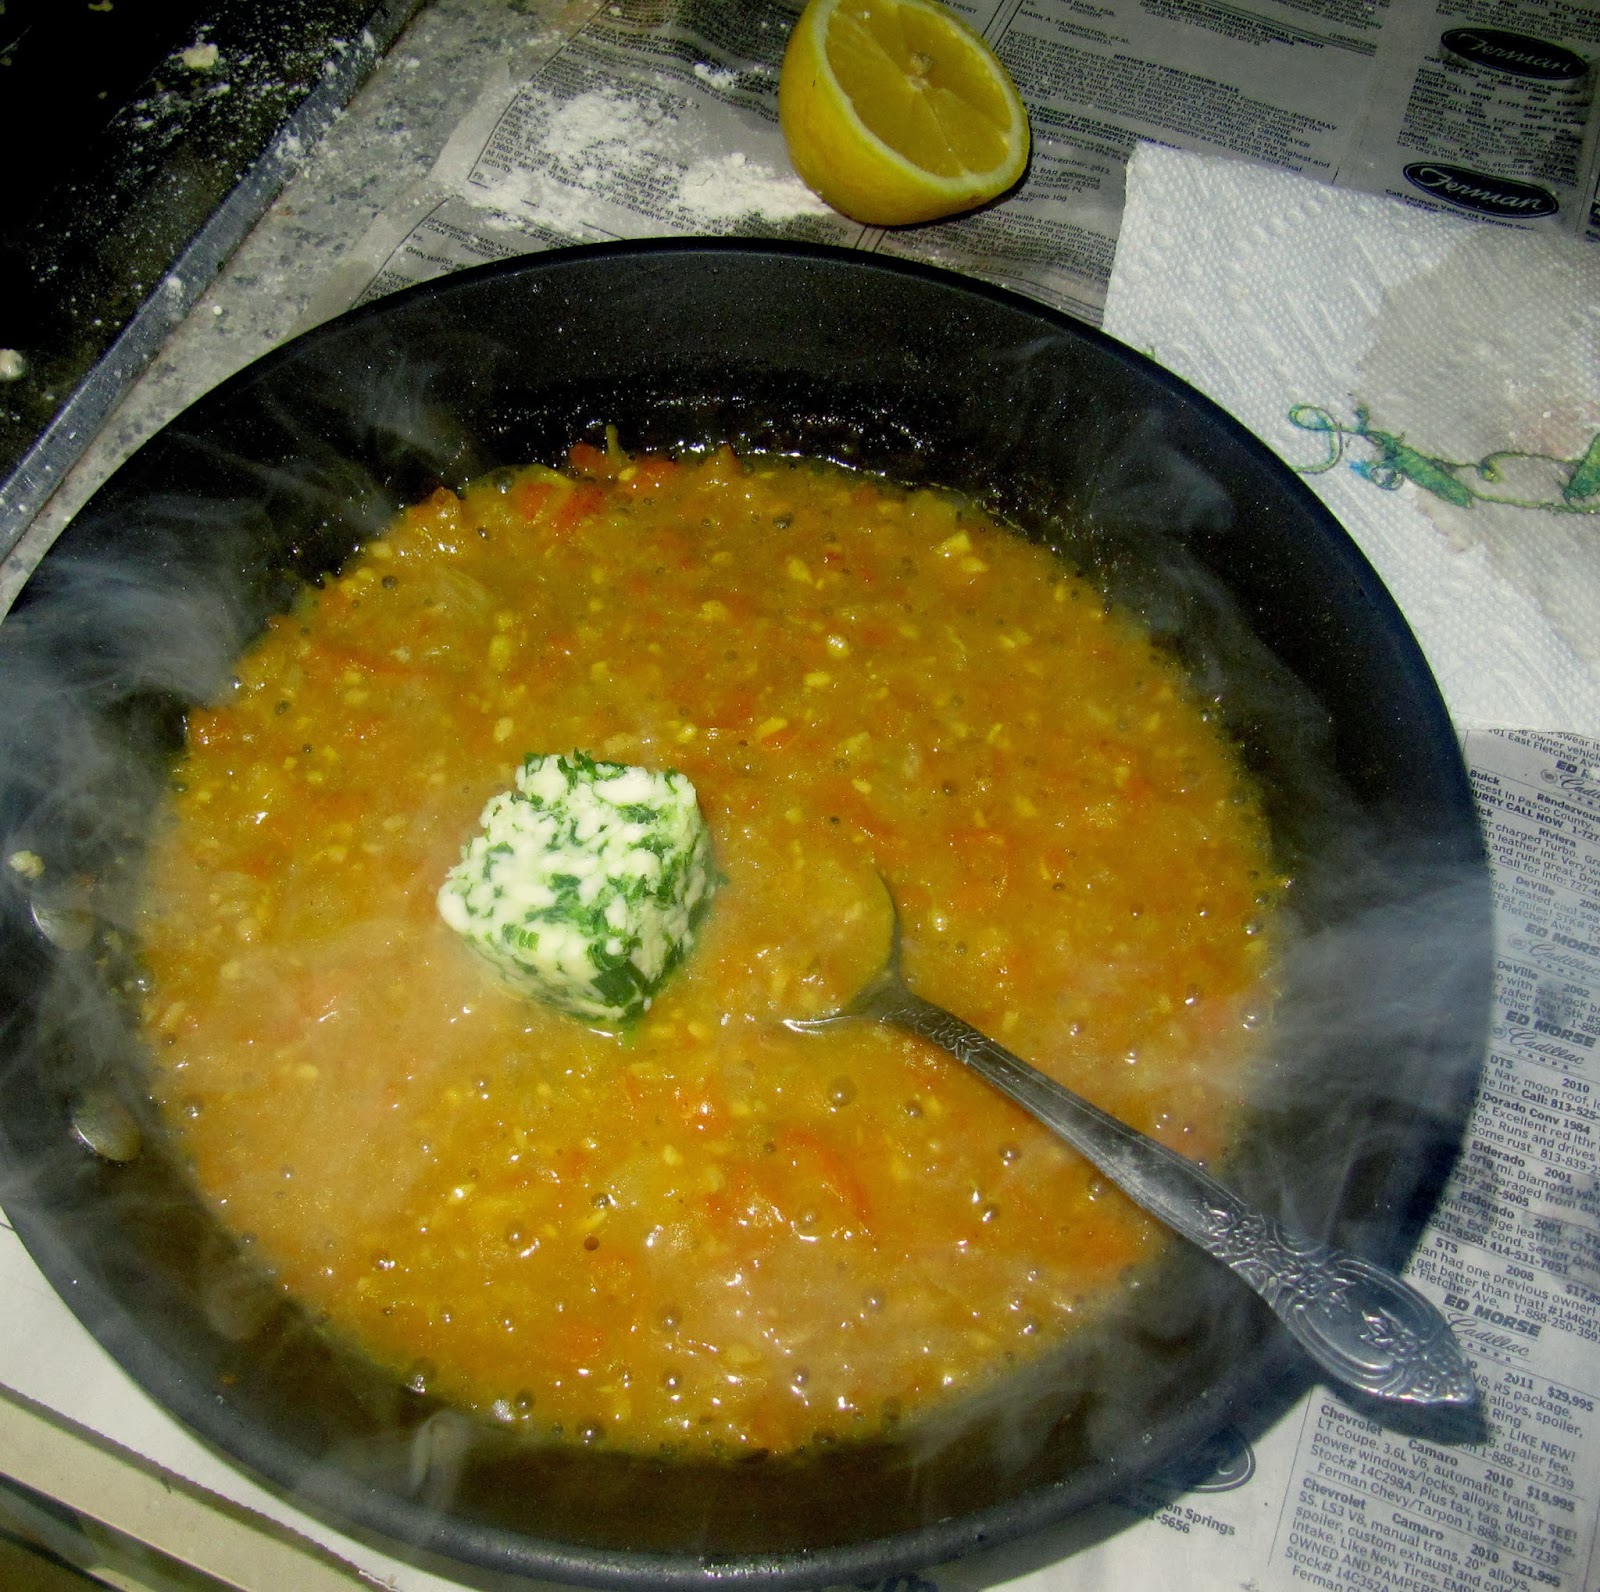 Curried kumquat sauce